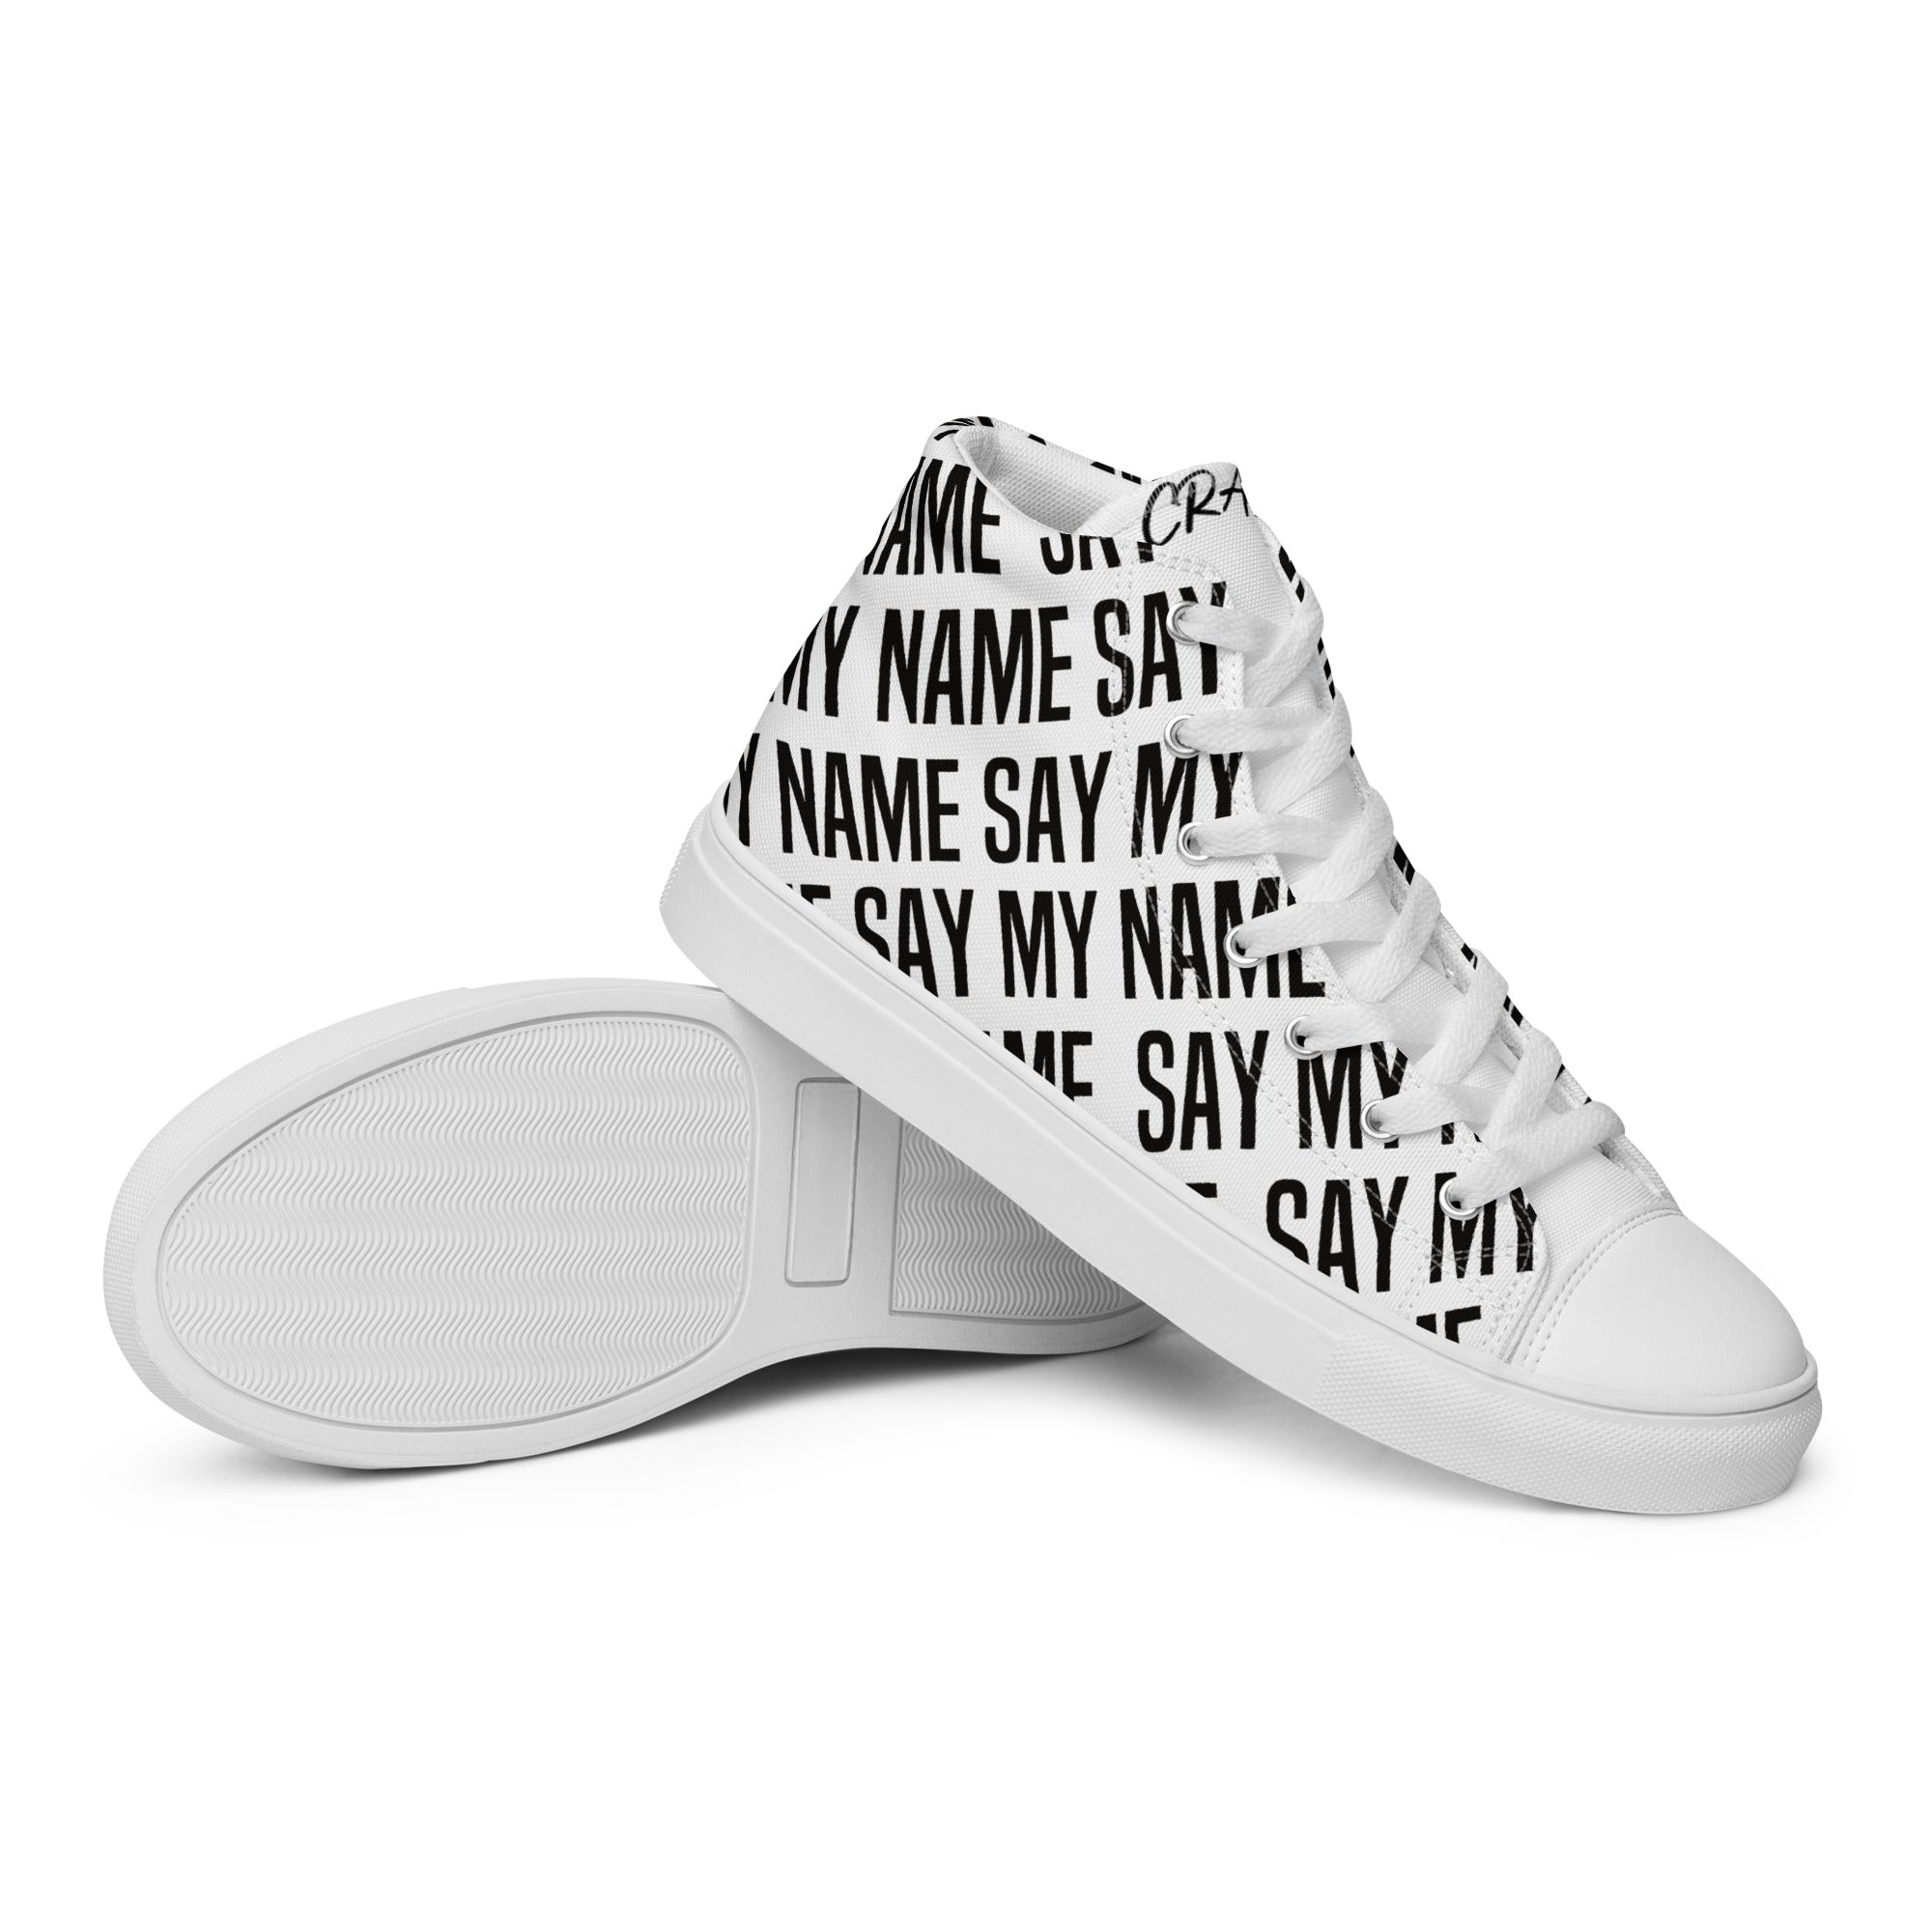 "SAY MY NAME" men's high canvas sneakers Multi black